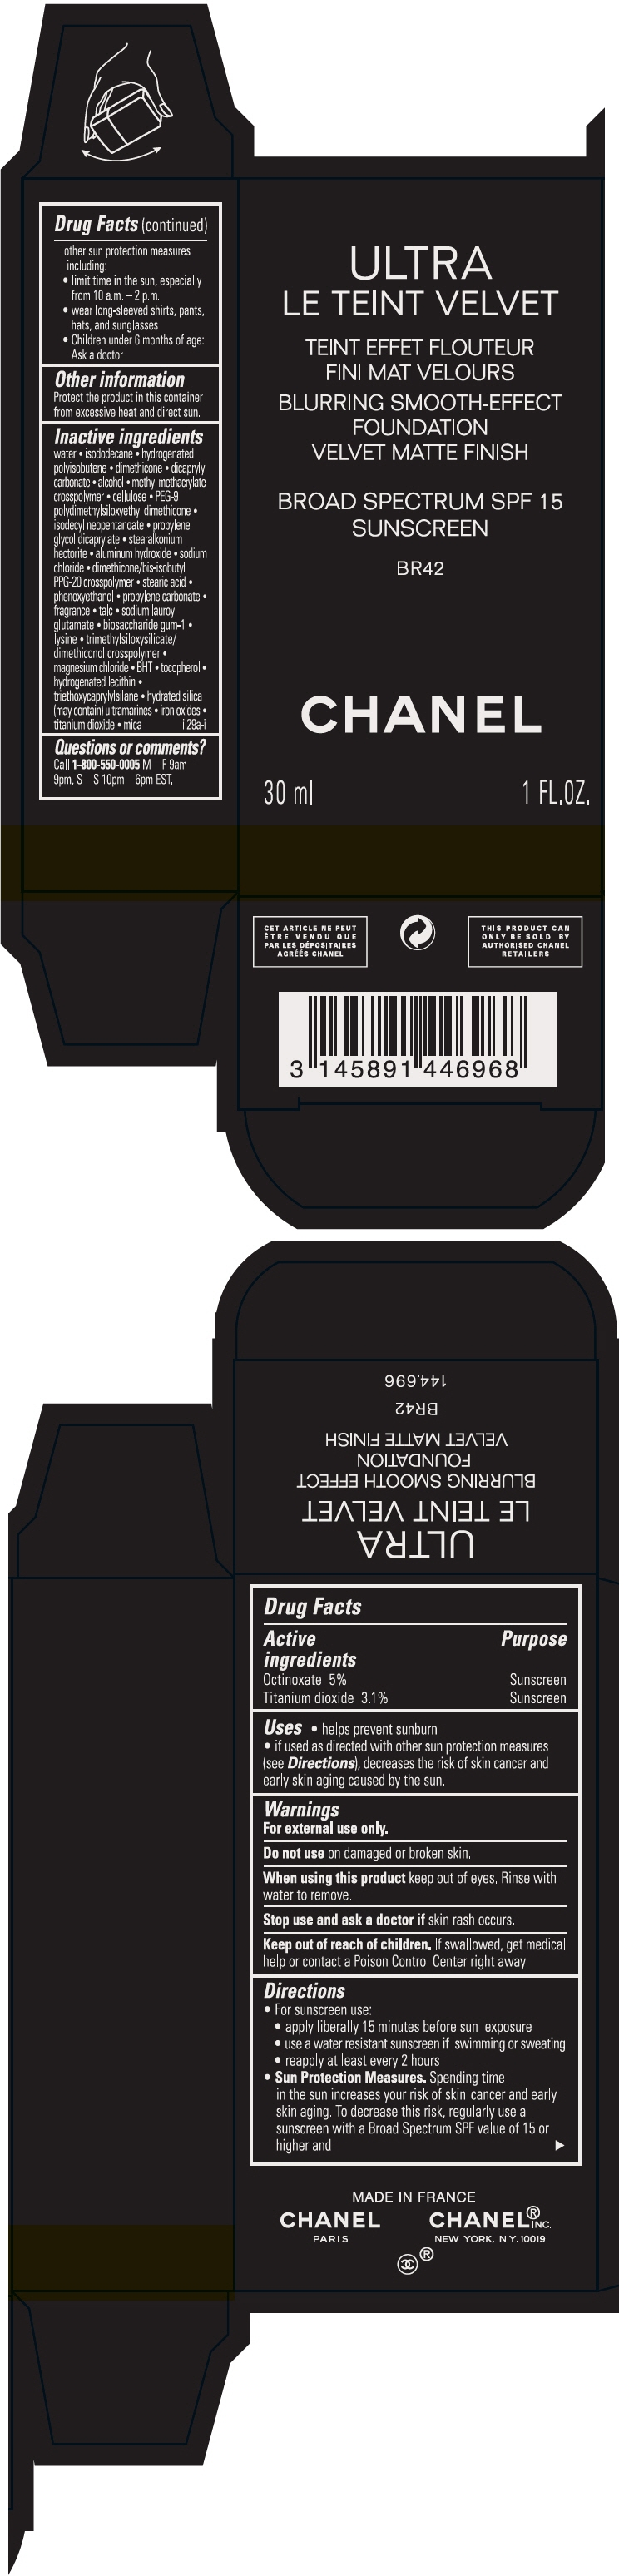 PRINCIPAL DISPLAY PANEL - 30 ml Bottle Carton - BR42